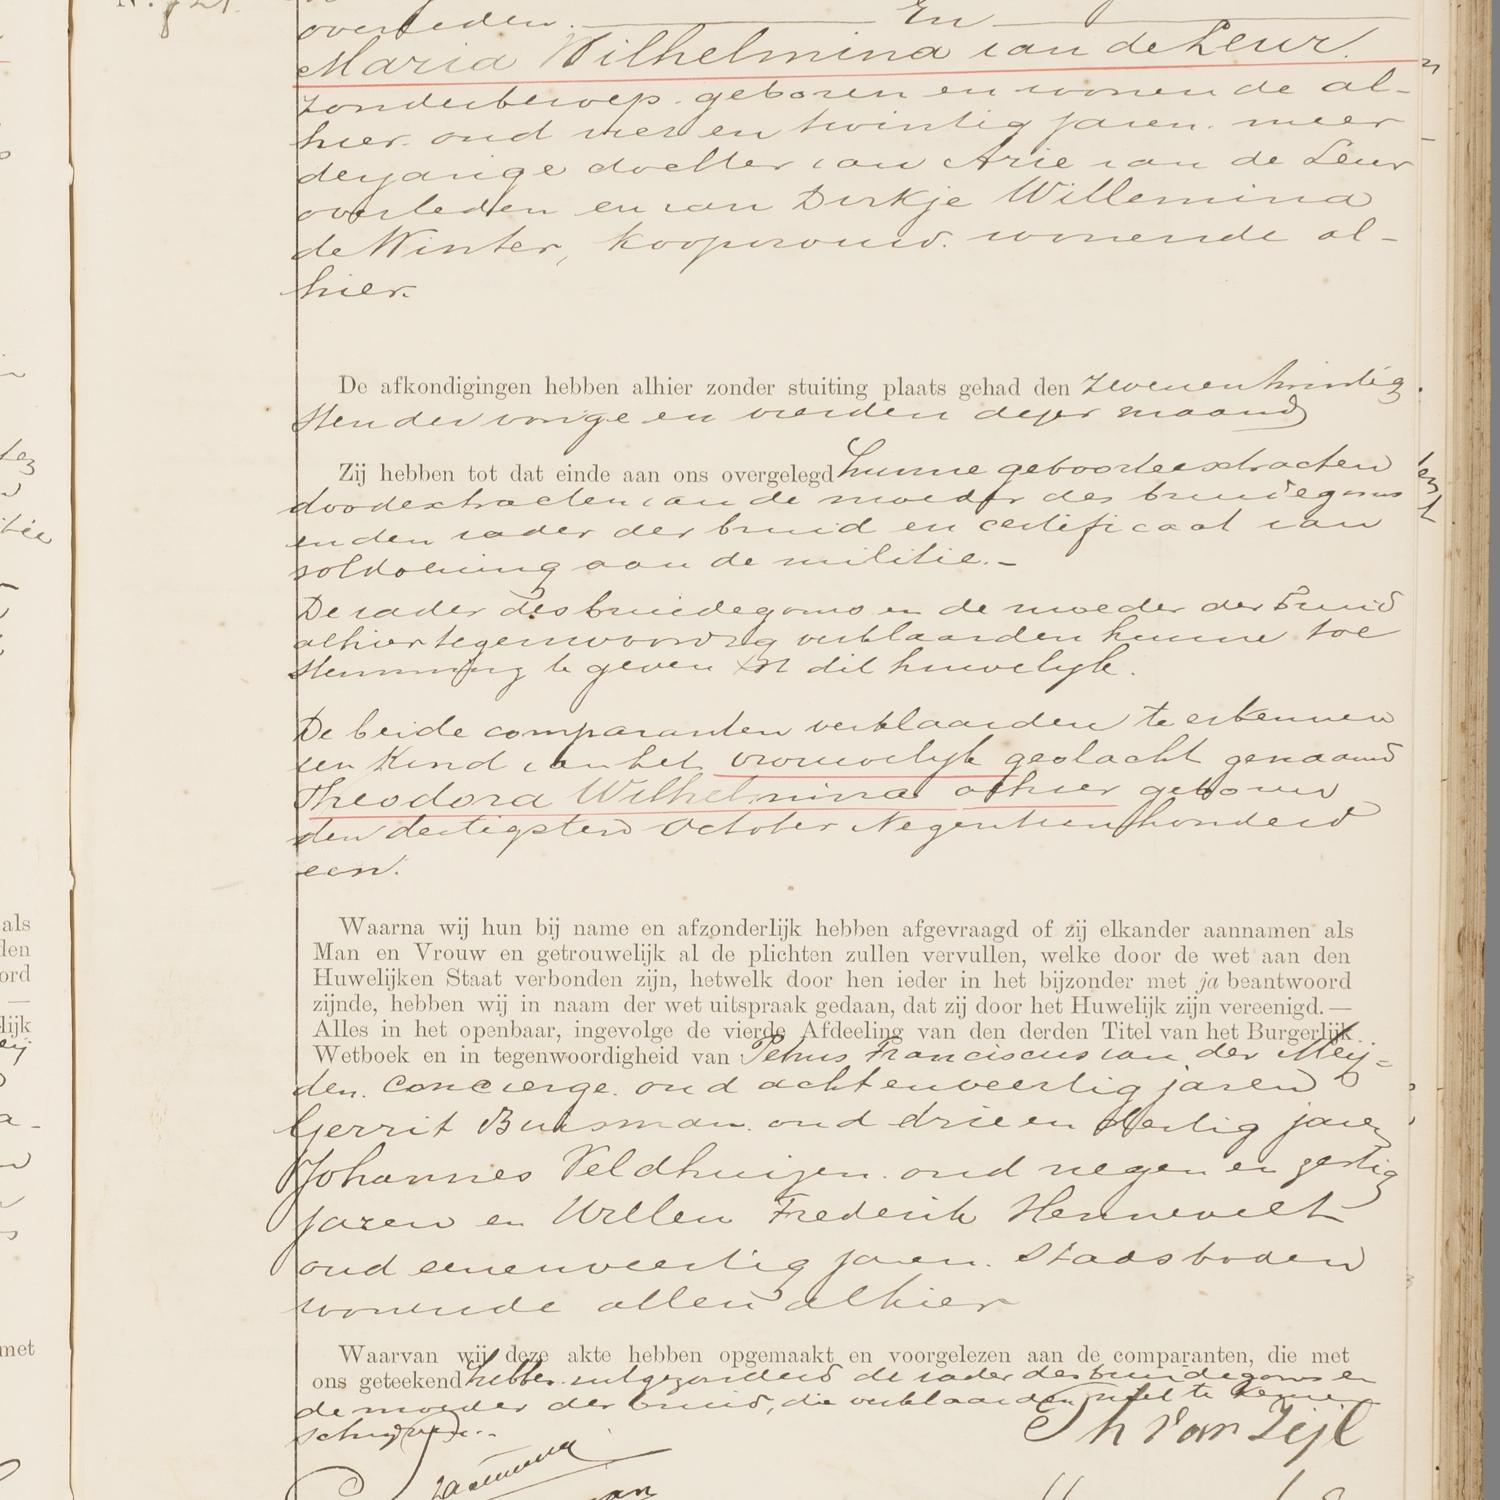 Civil registry of marriages, Utrecht, 1904, record 721